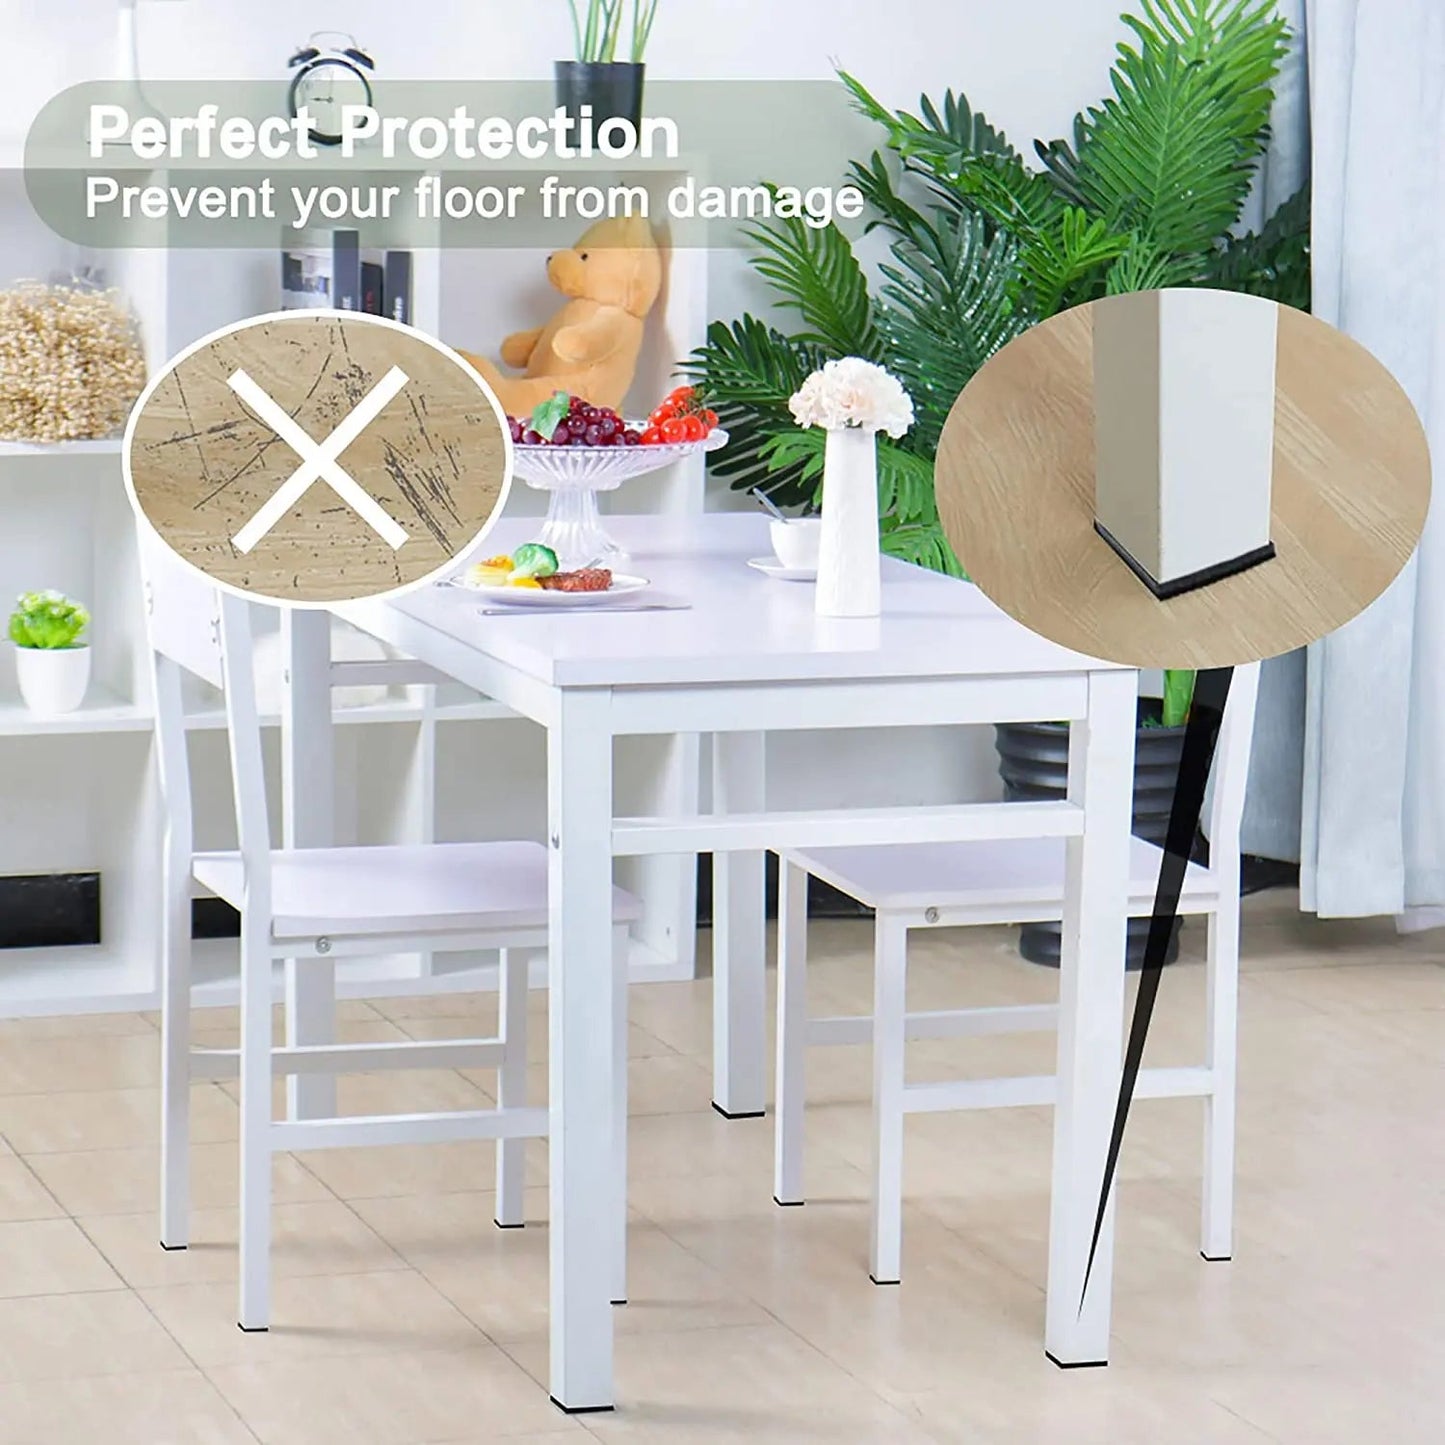 Furniture Pads Non- Skid Floor Protector 100Pcs furniture pads- #Royalkart#felt pads